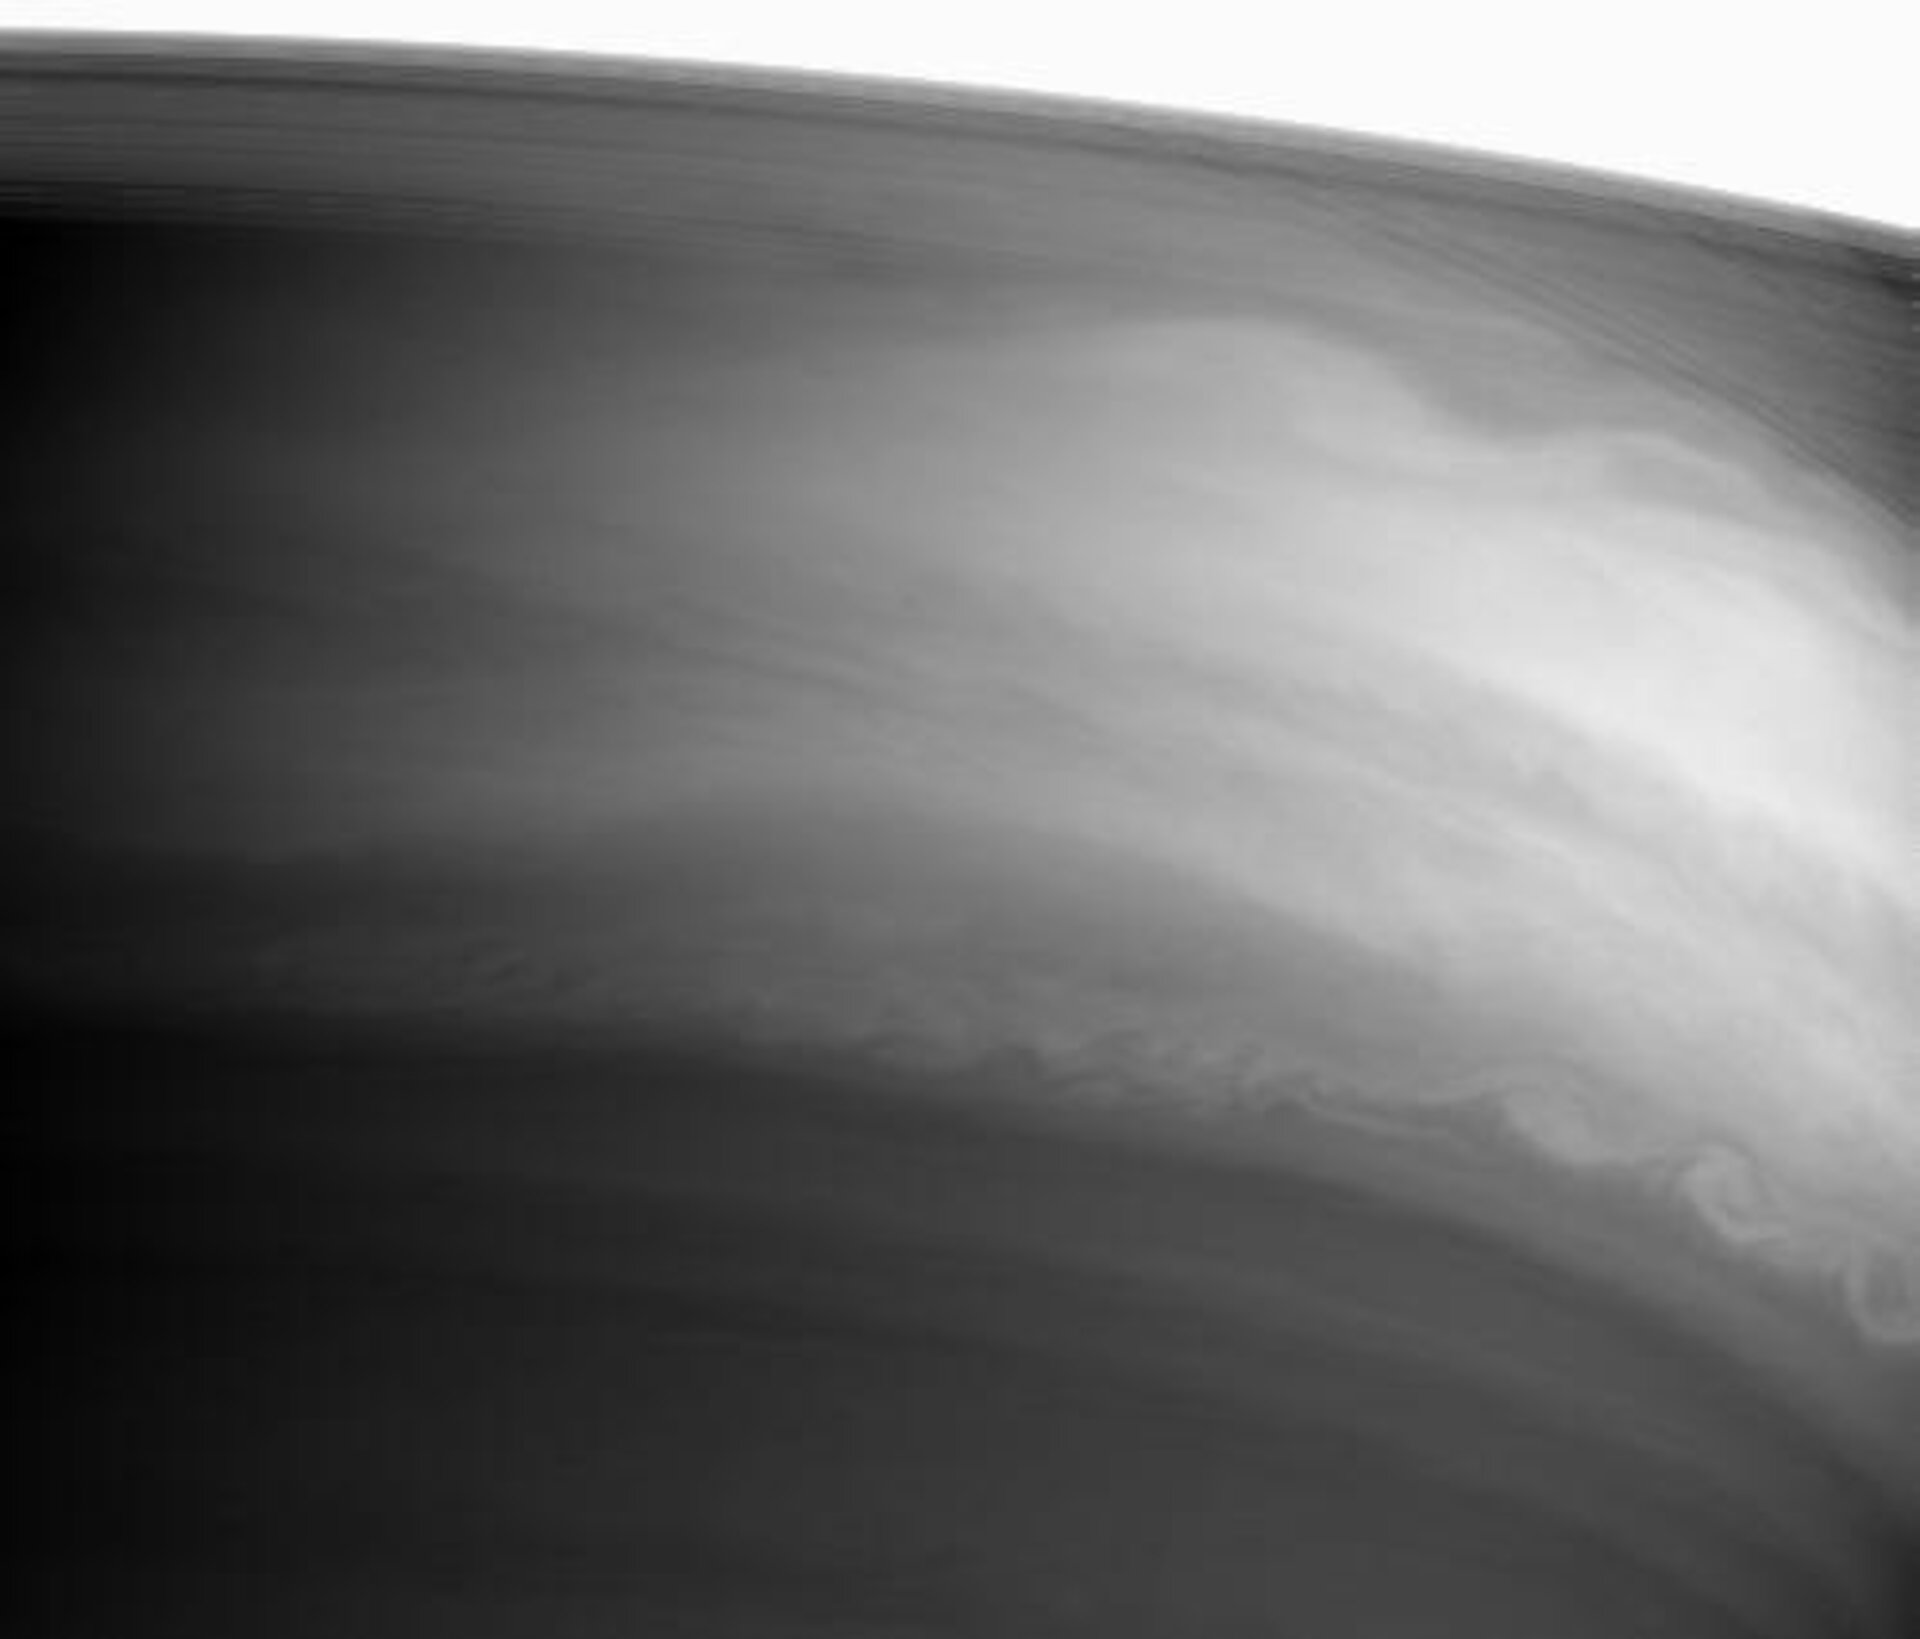 Swirls of clouds on Saturn